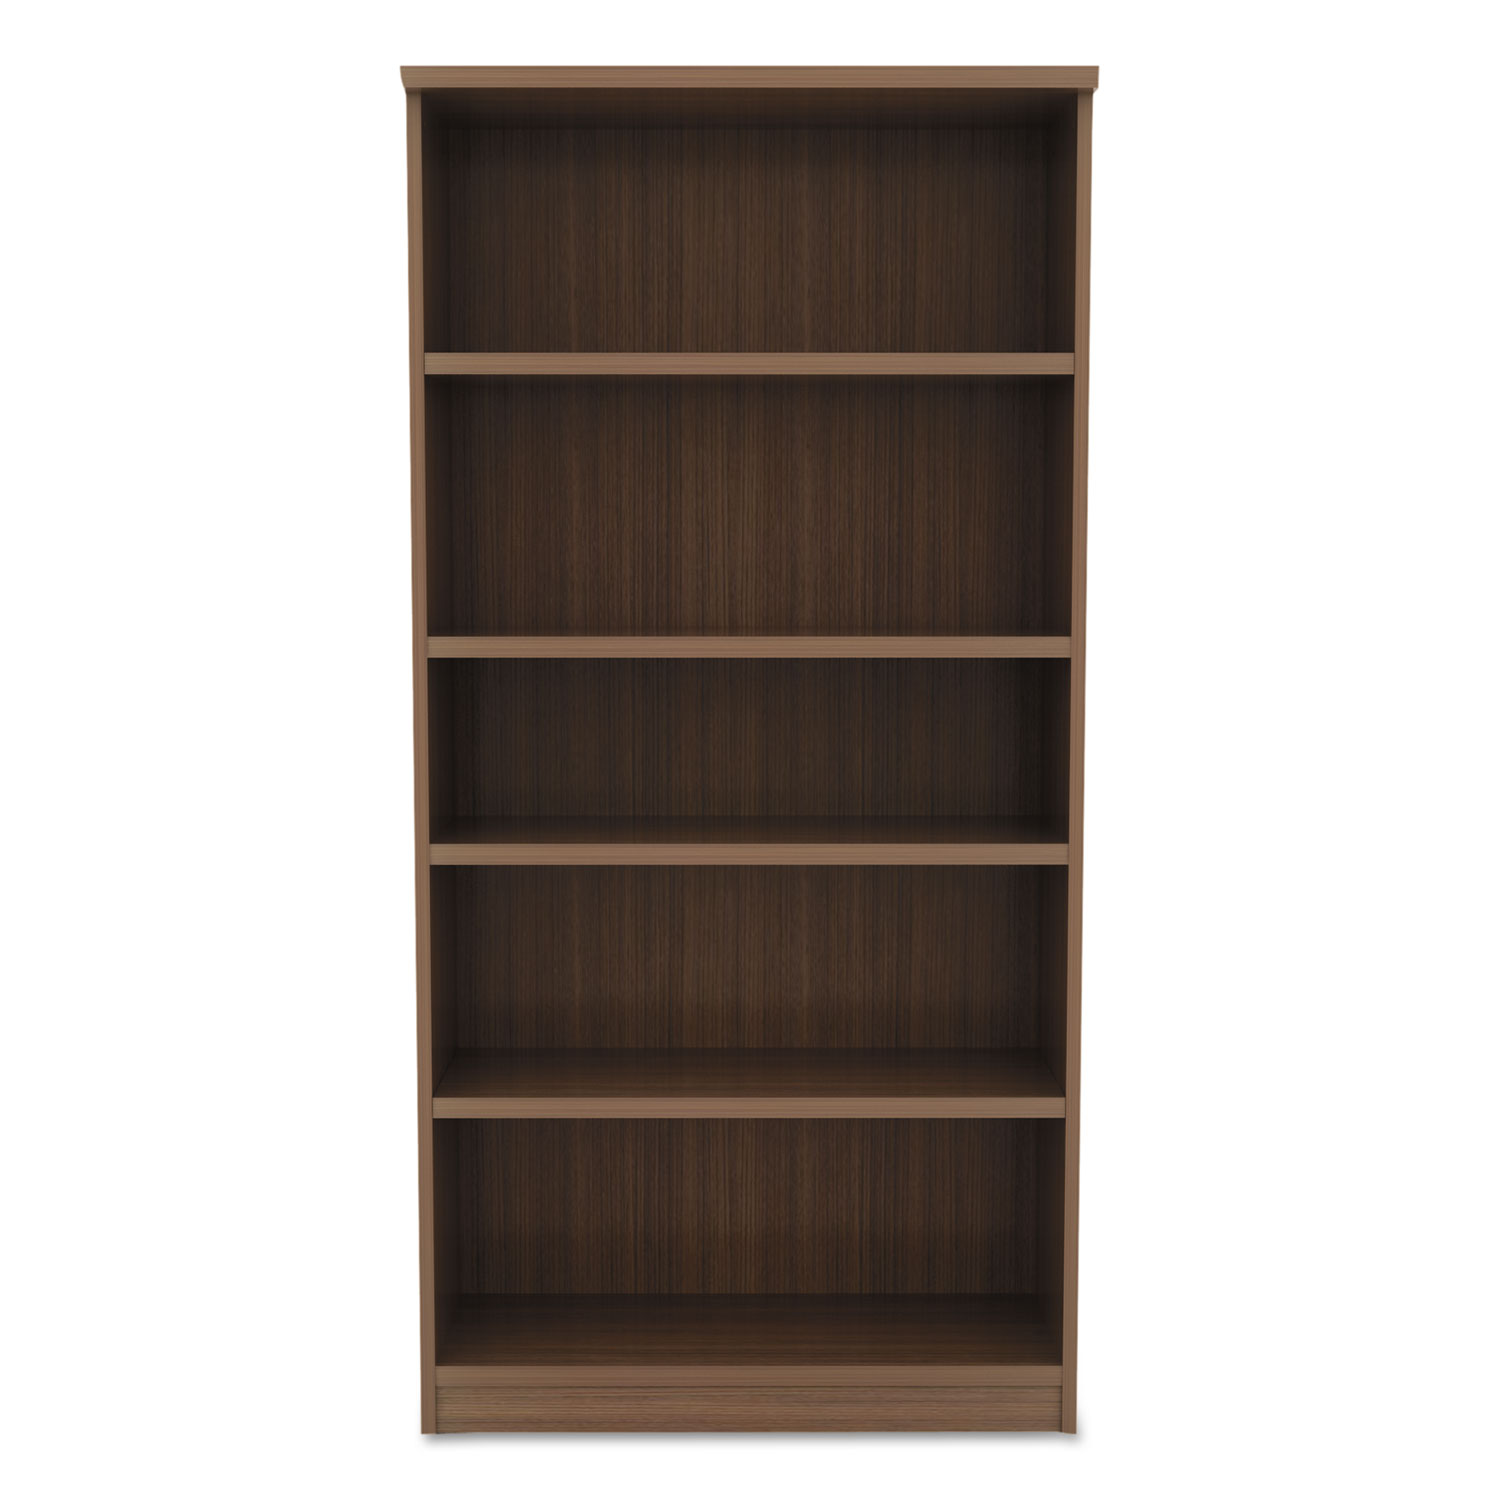 Alera Valencia Series Bookcase, Five-Shelf, 31 3/4w x 14d x 65h, Modern Walnut